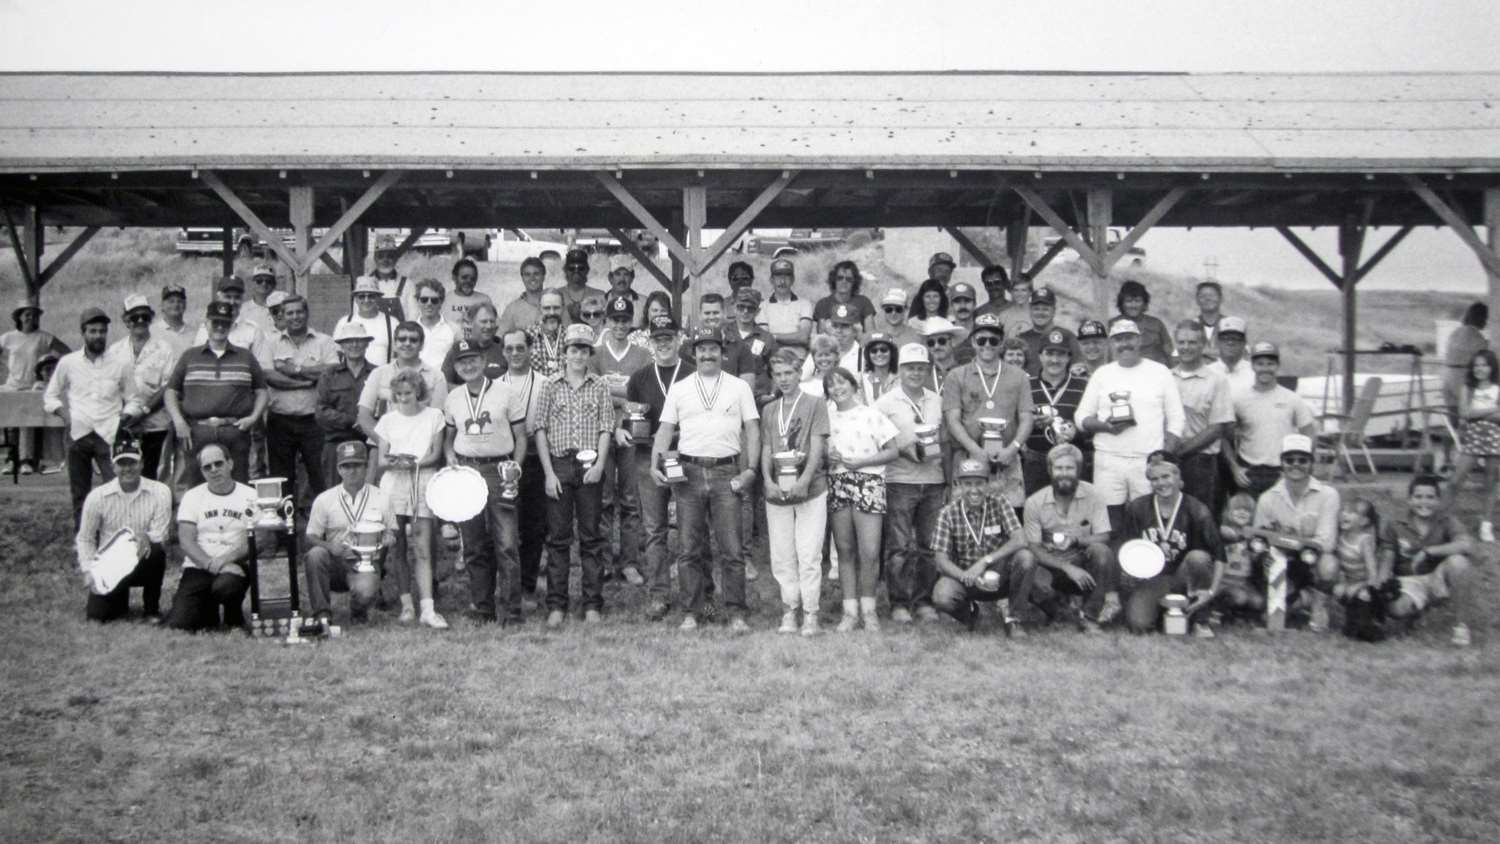 1987 Colorado Silhouette Rifle Championship